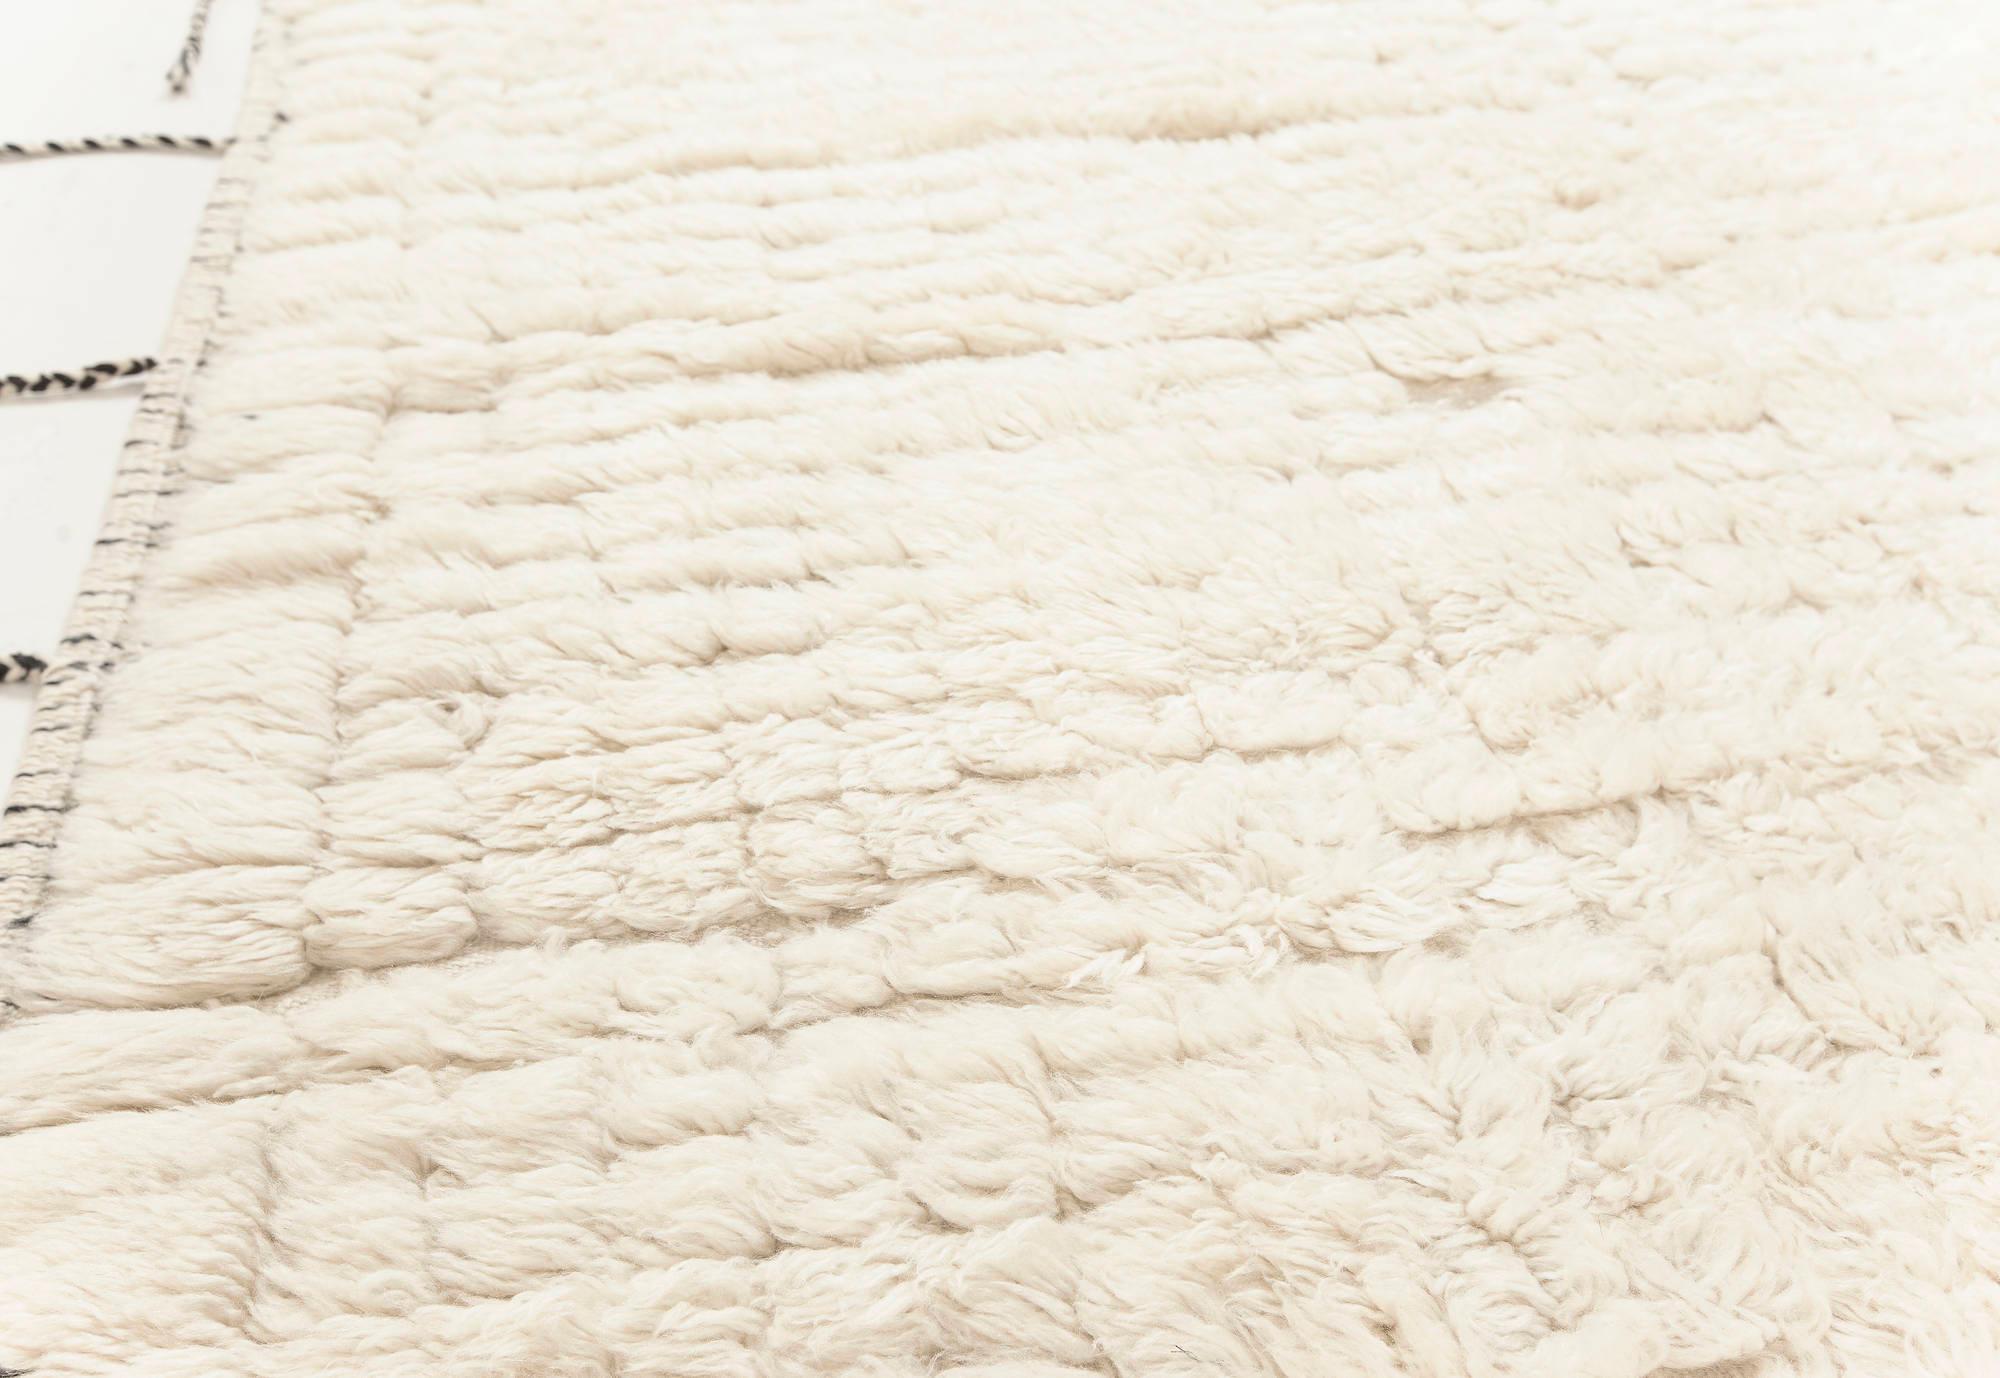 Contemporary Tribal style Moroccan white, grey handmade rug by Doris Leslie Blau.
Size: 9'5